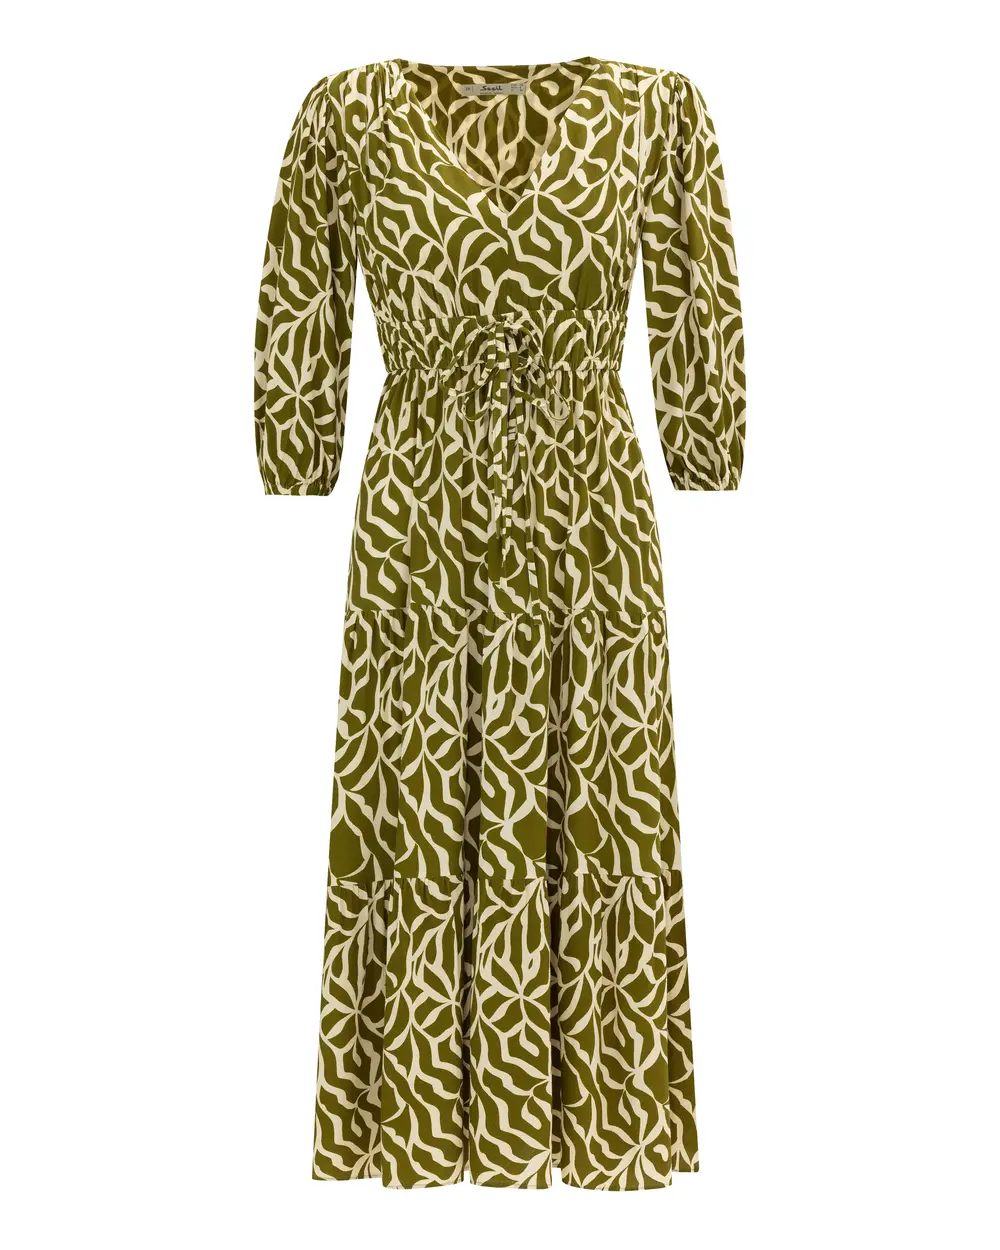 V-Neck Patterned Dress with Drawstring Waist